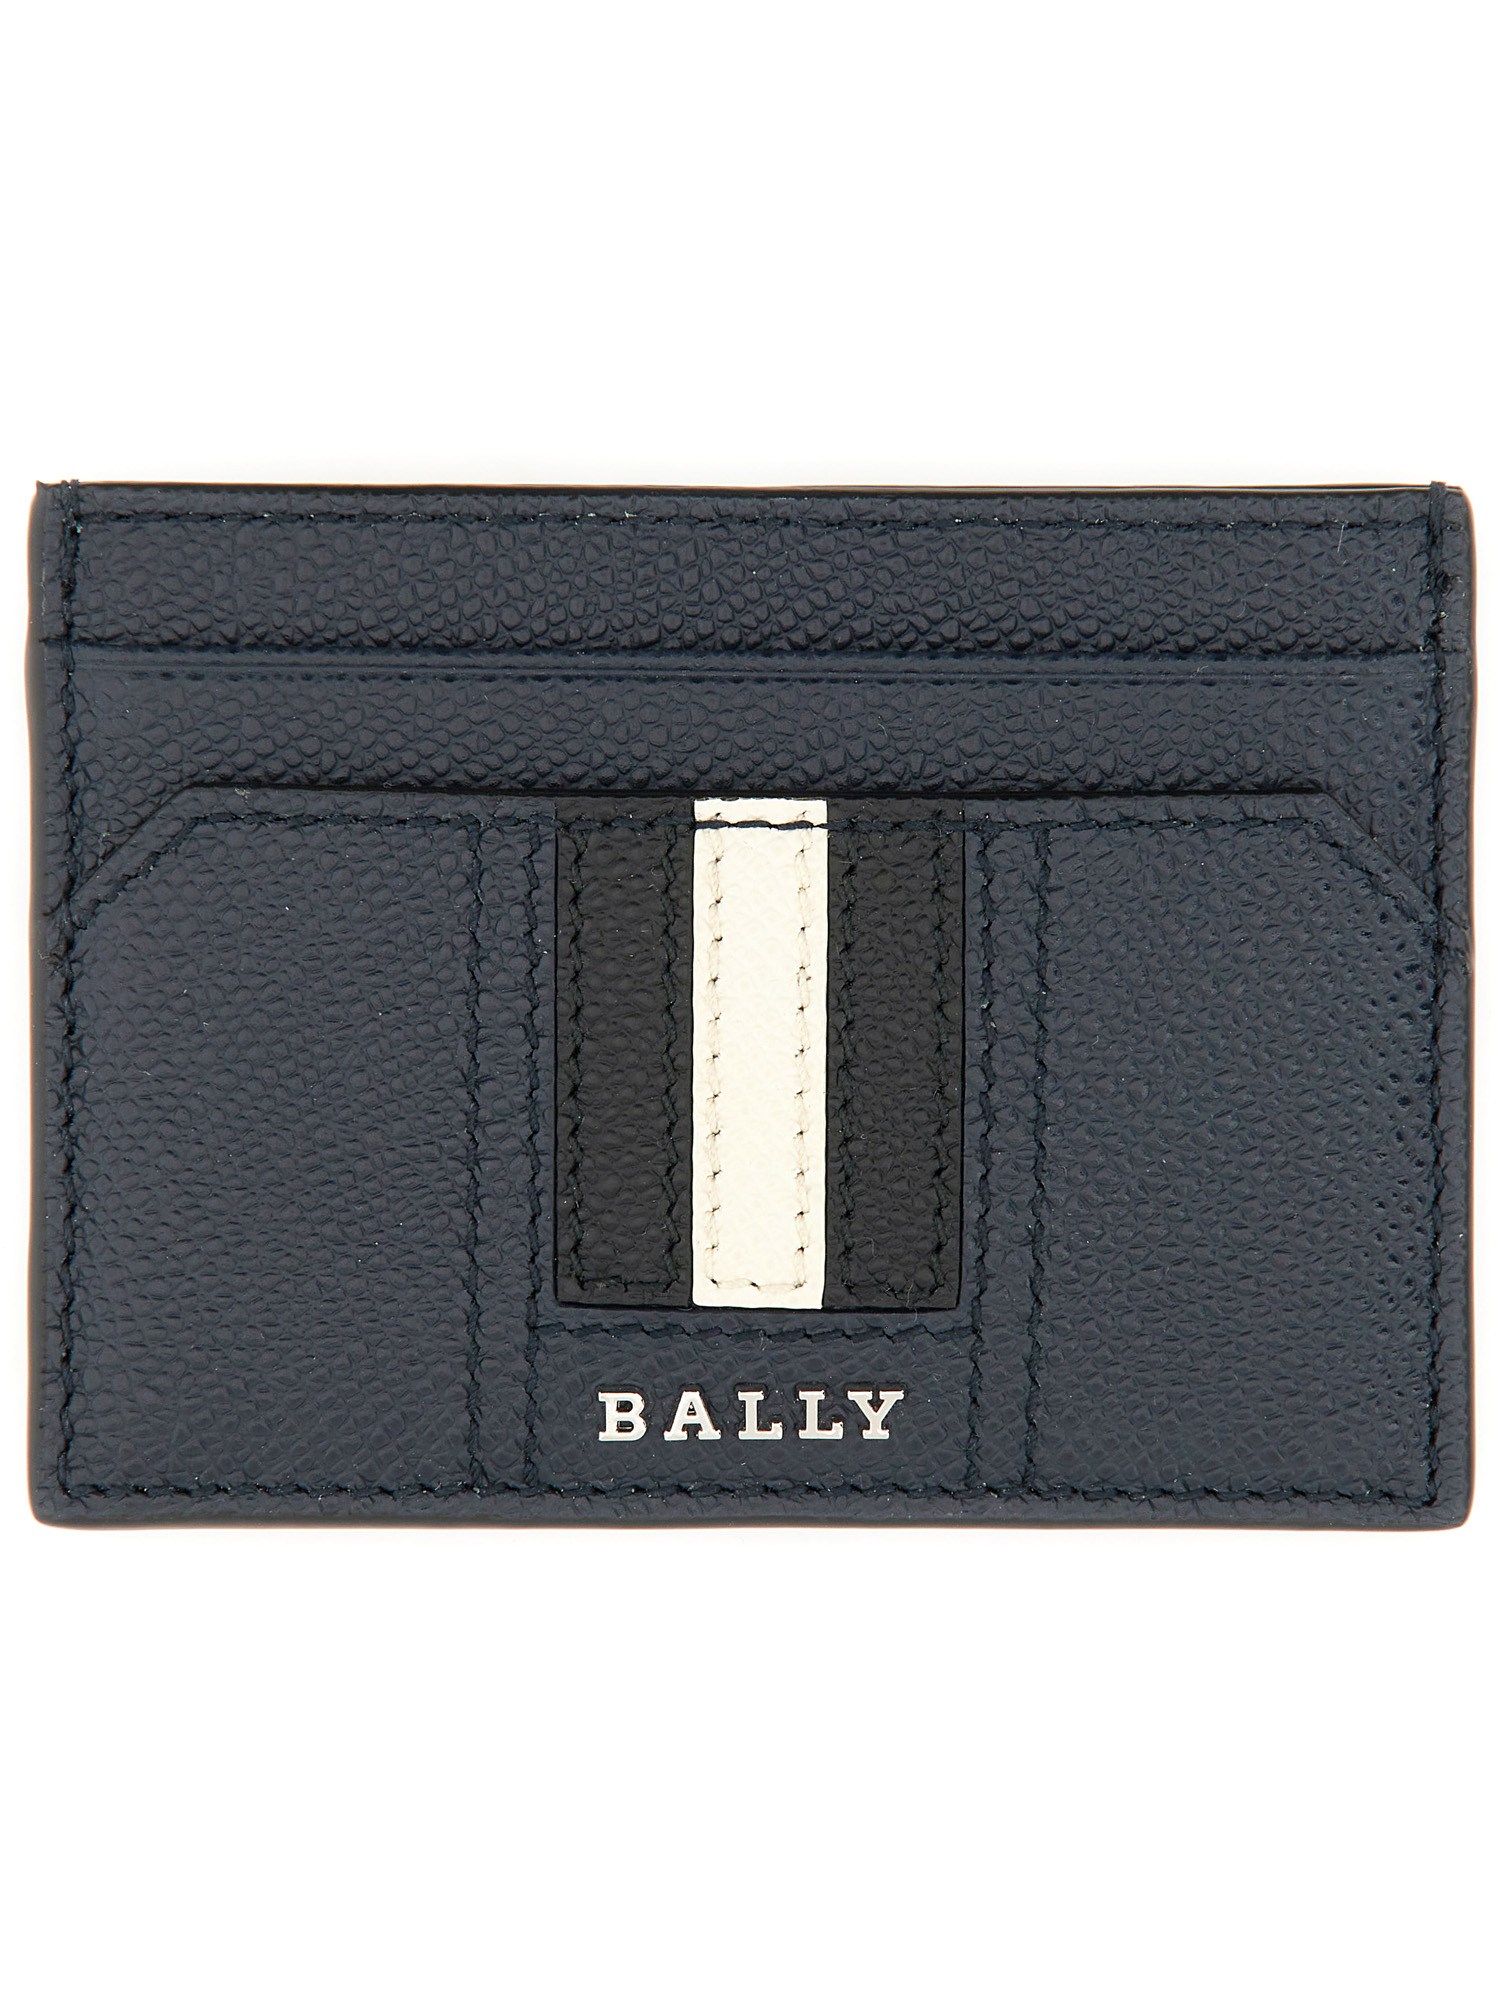 bally card holder 